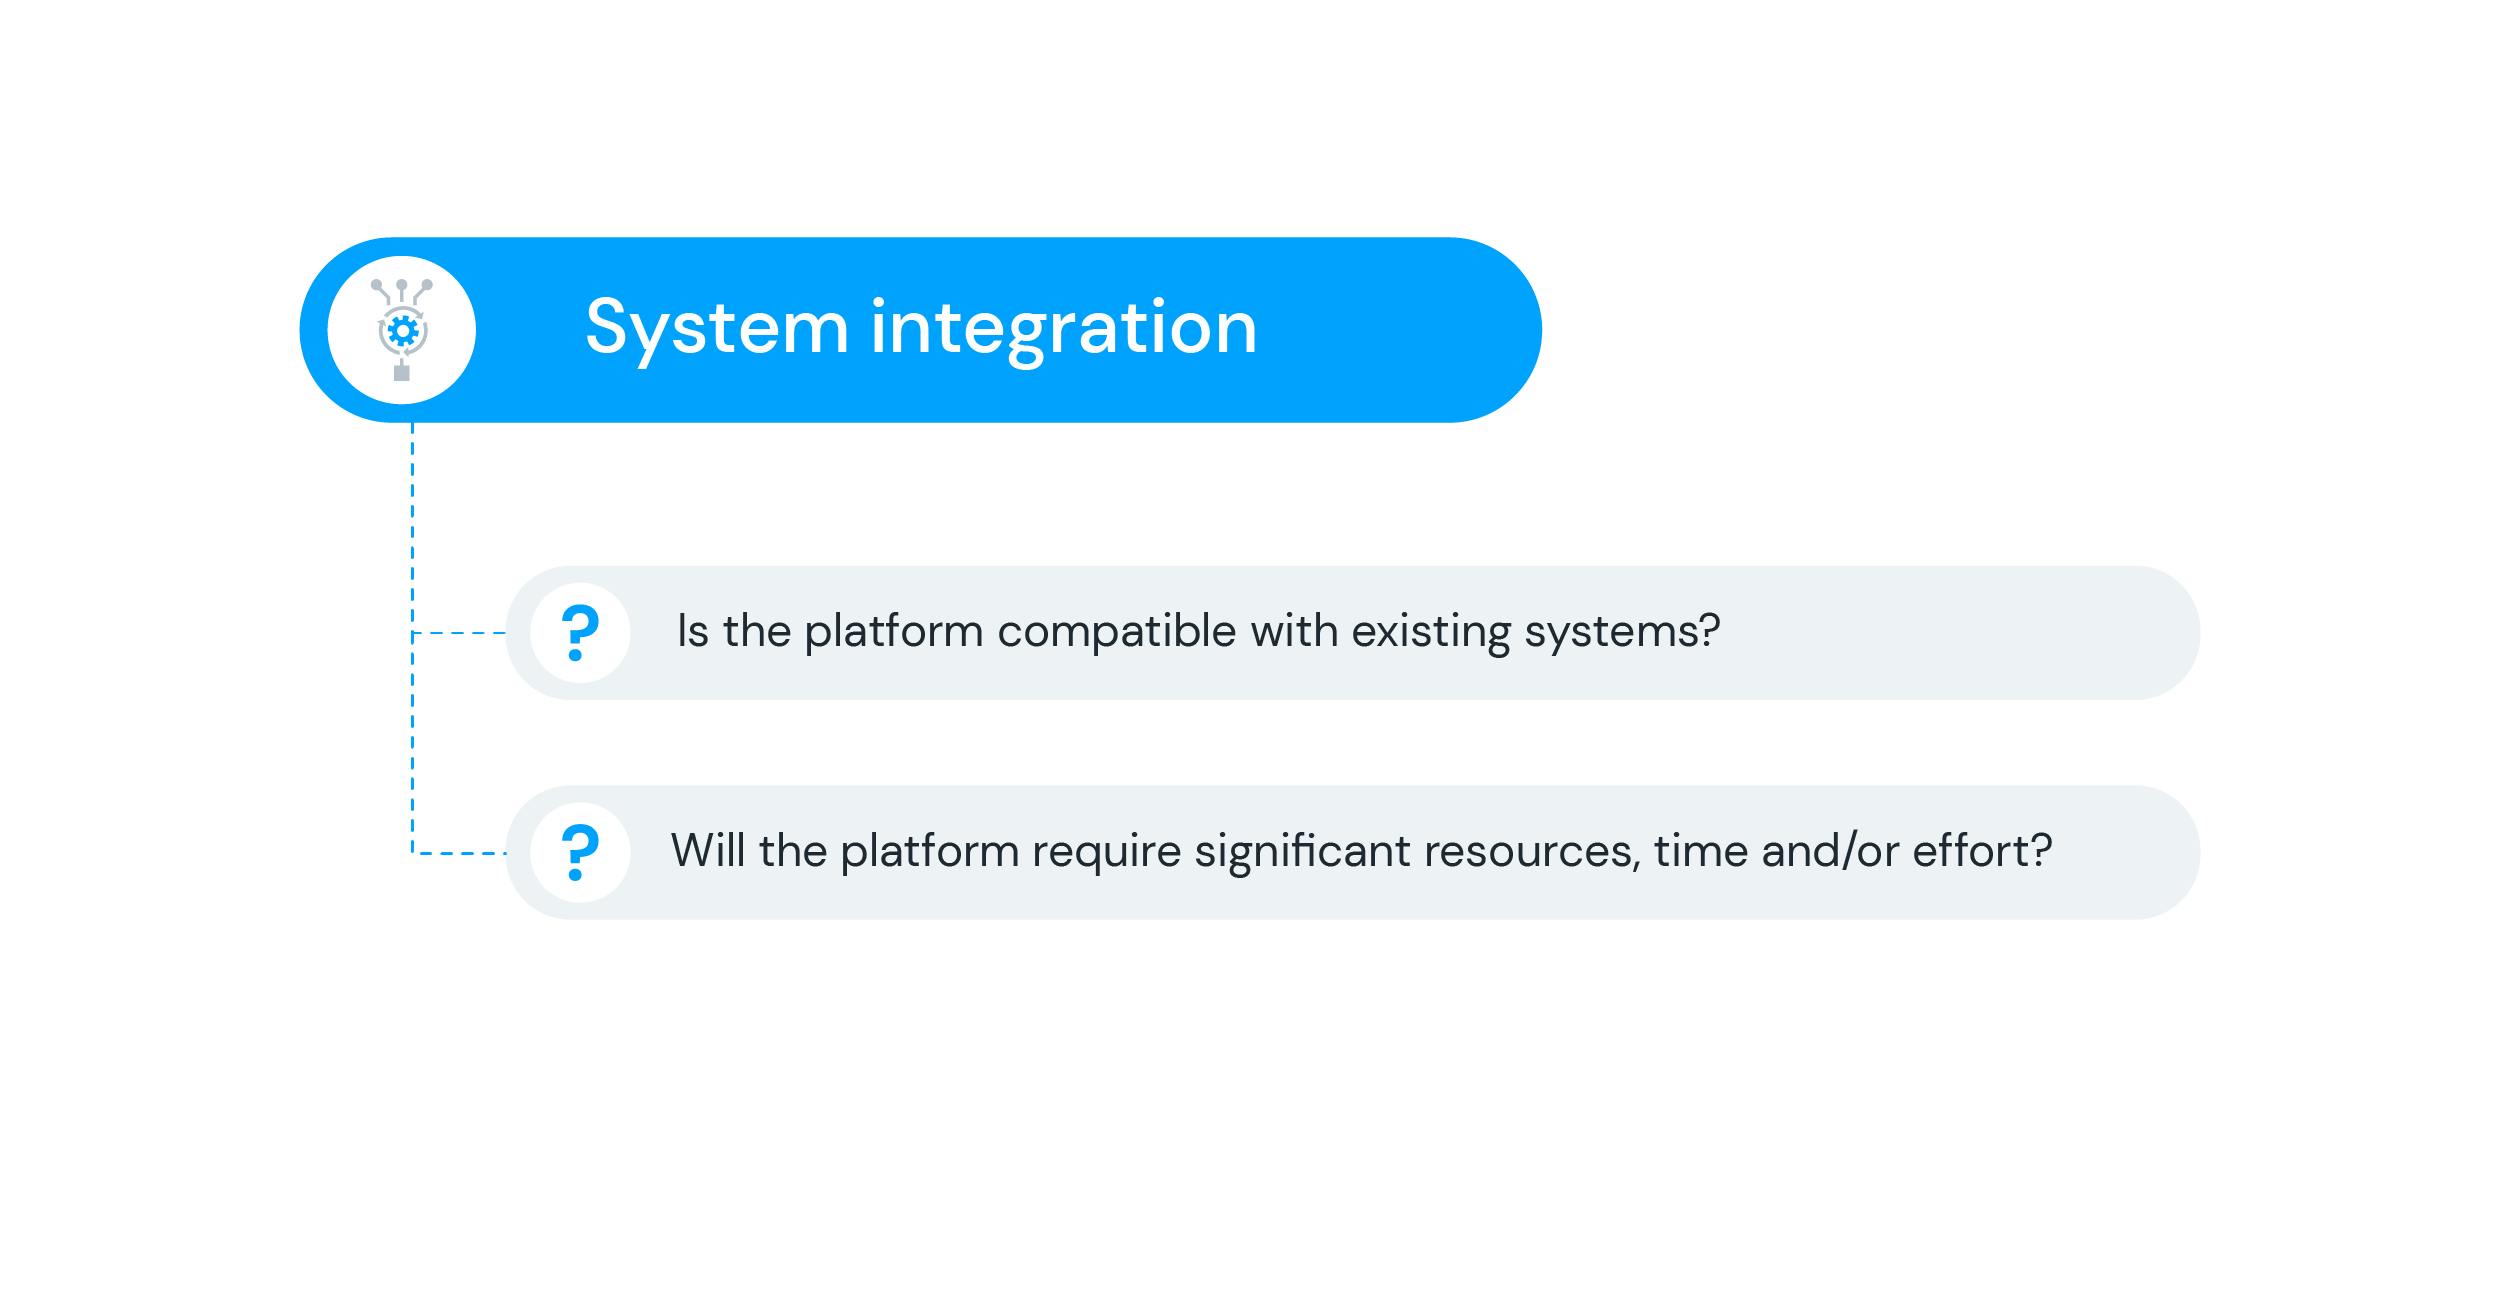 System integration as a key consideration when choosing a health platform